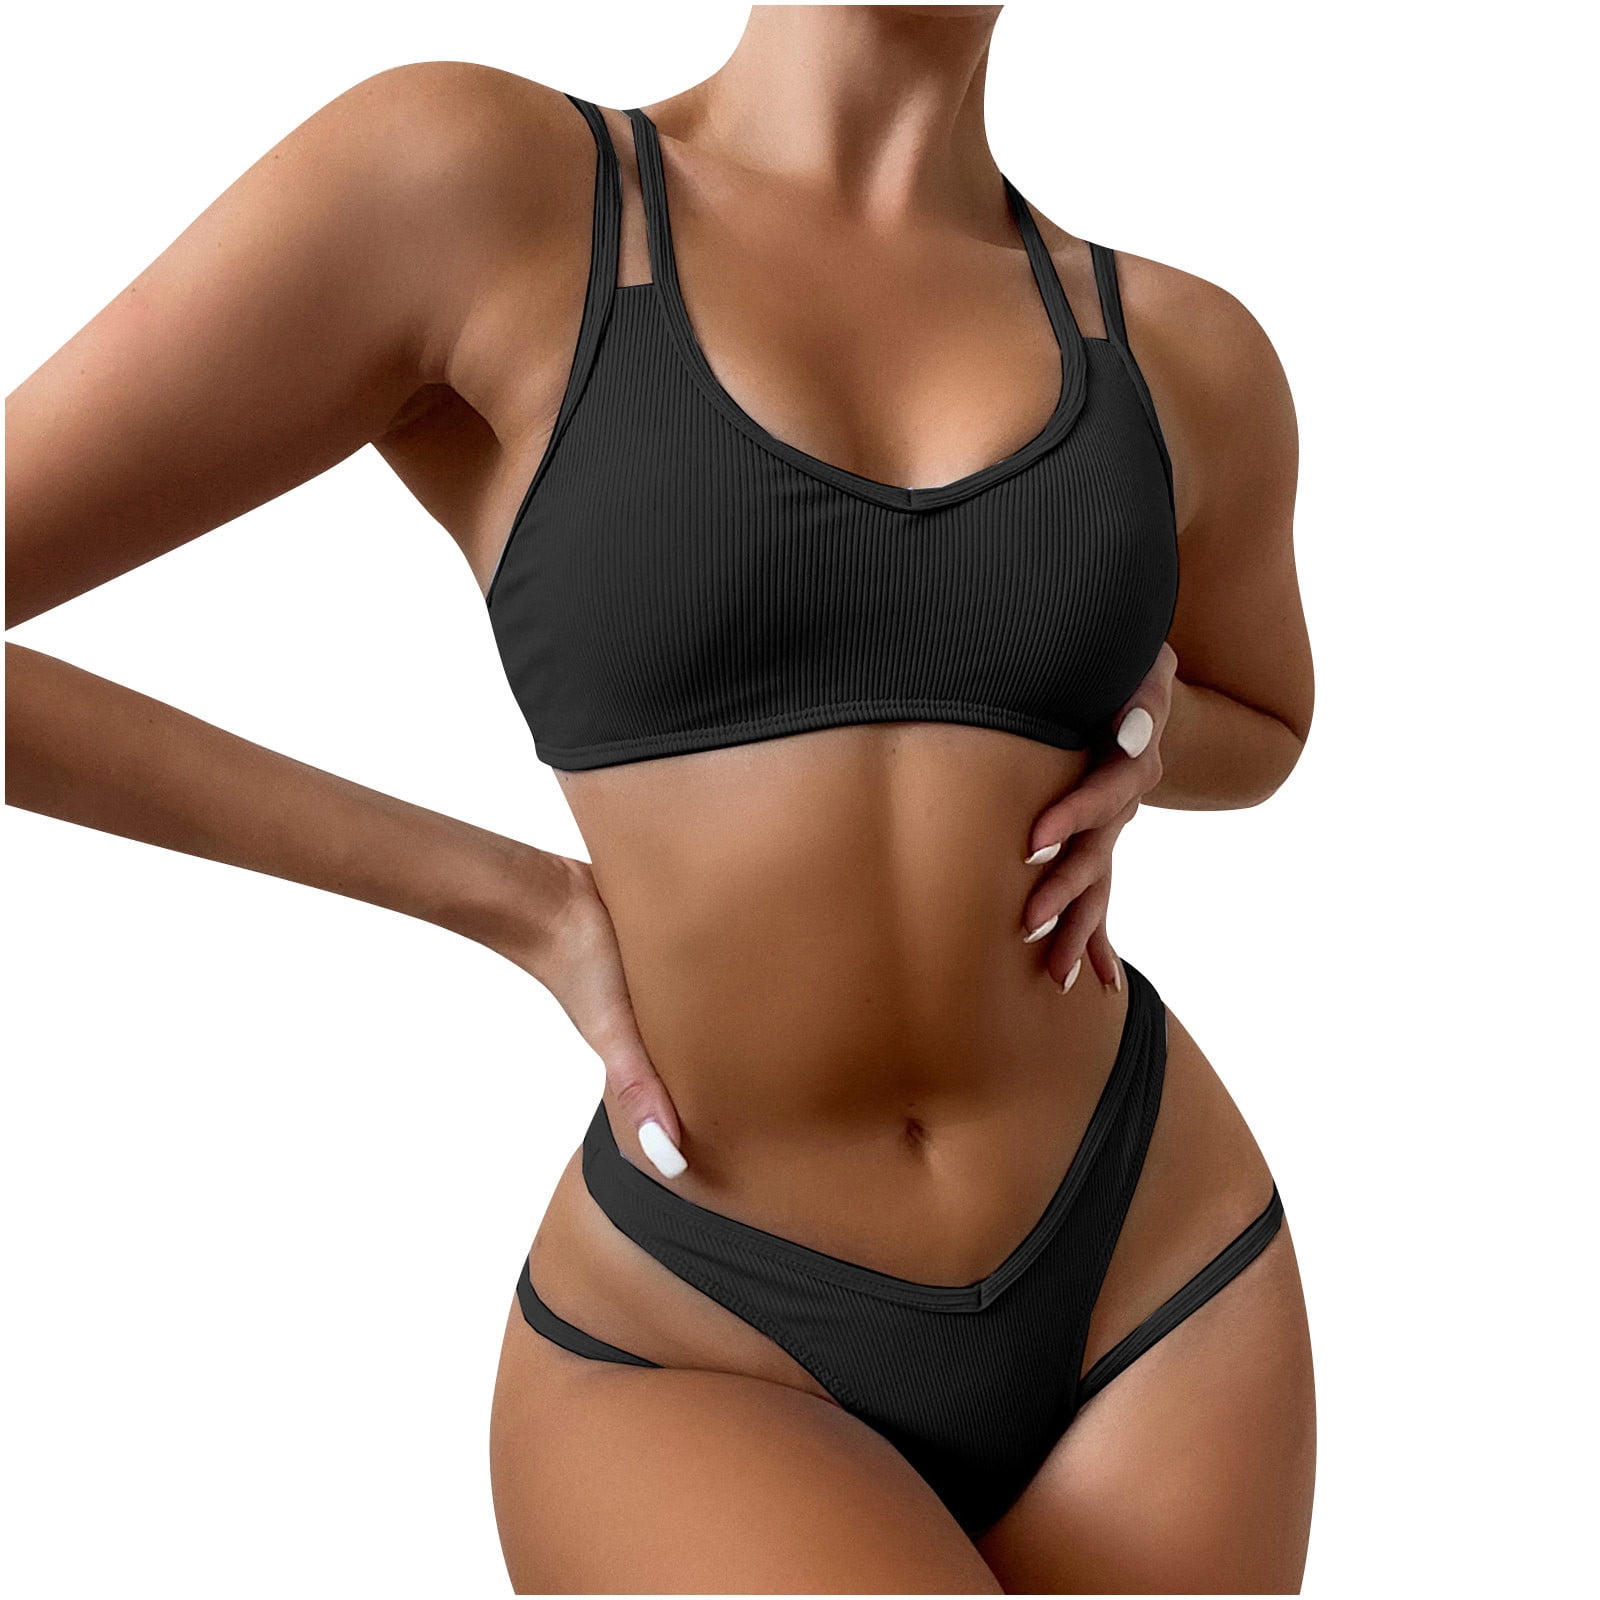 Rqyyd Reduced Womens V Neck Bikini Set Double Shoulder Straps Two Piece Swimsuit Solid Cutout Bathing Suit(Hot Pink,L), Women's, Size: Large